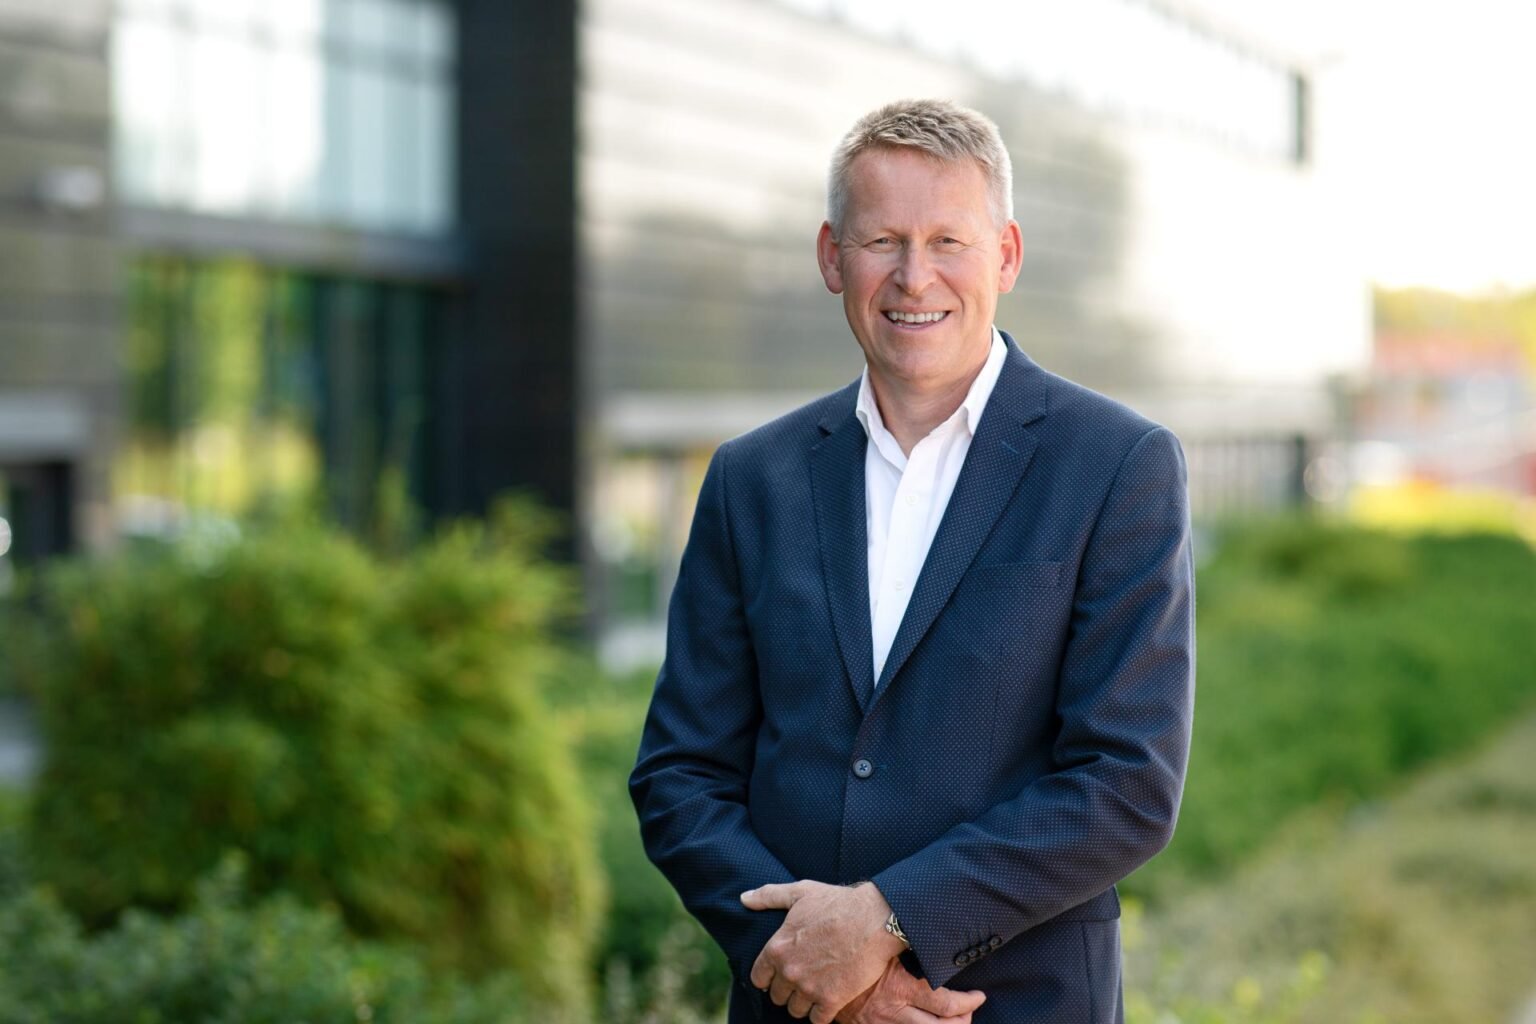 Zaptec CEO Peter Bardenfleth-Hansen tritt zurück